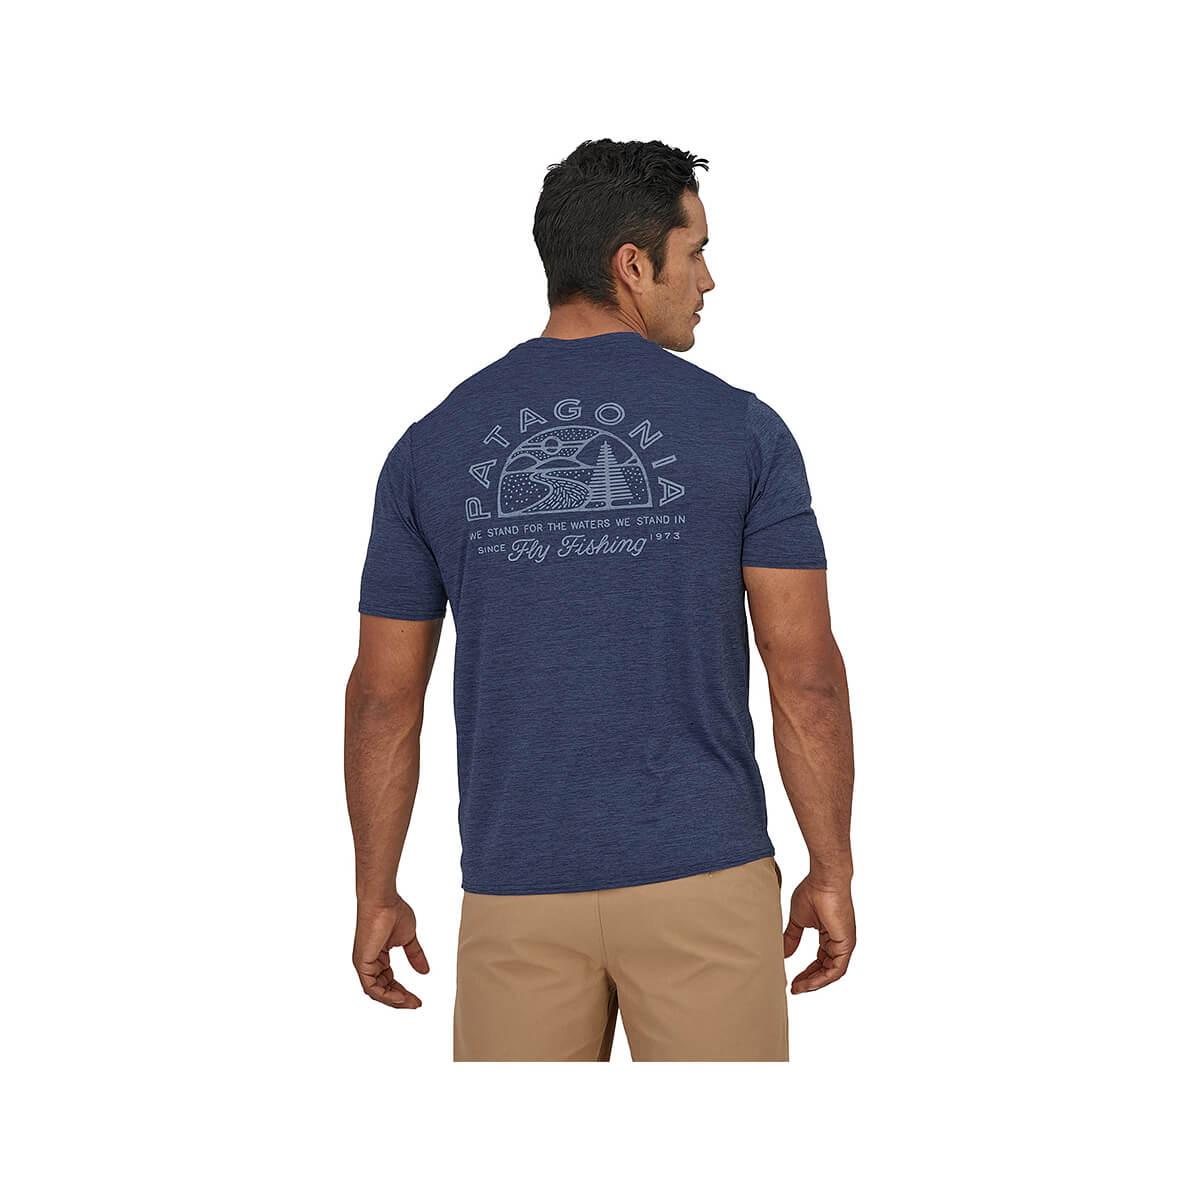  Men's Capilene Cool Daily Short Sleeve Graphic Shirt